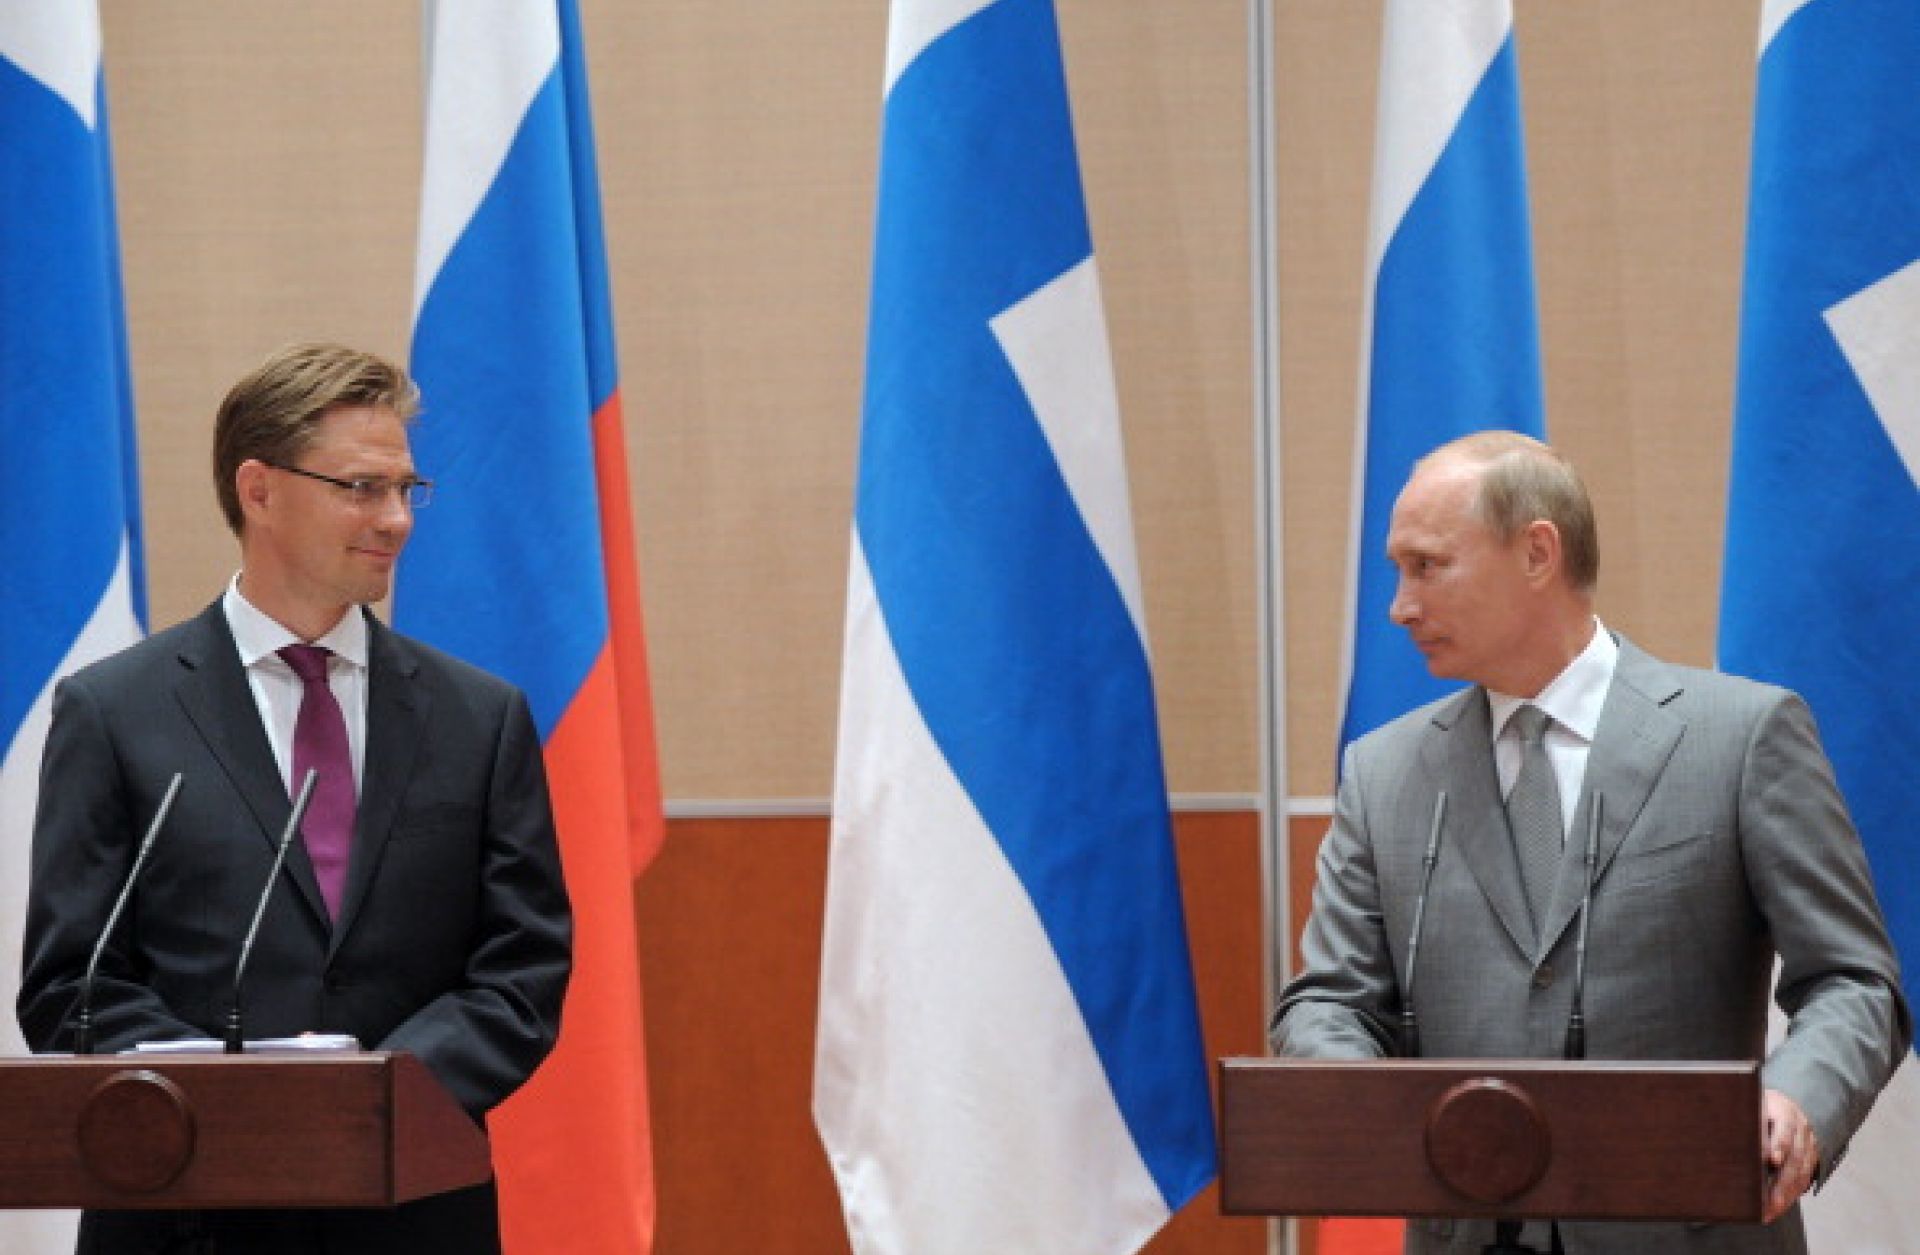 Finland Seeks Greater Regional Collaboration